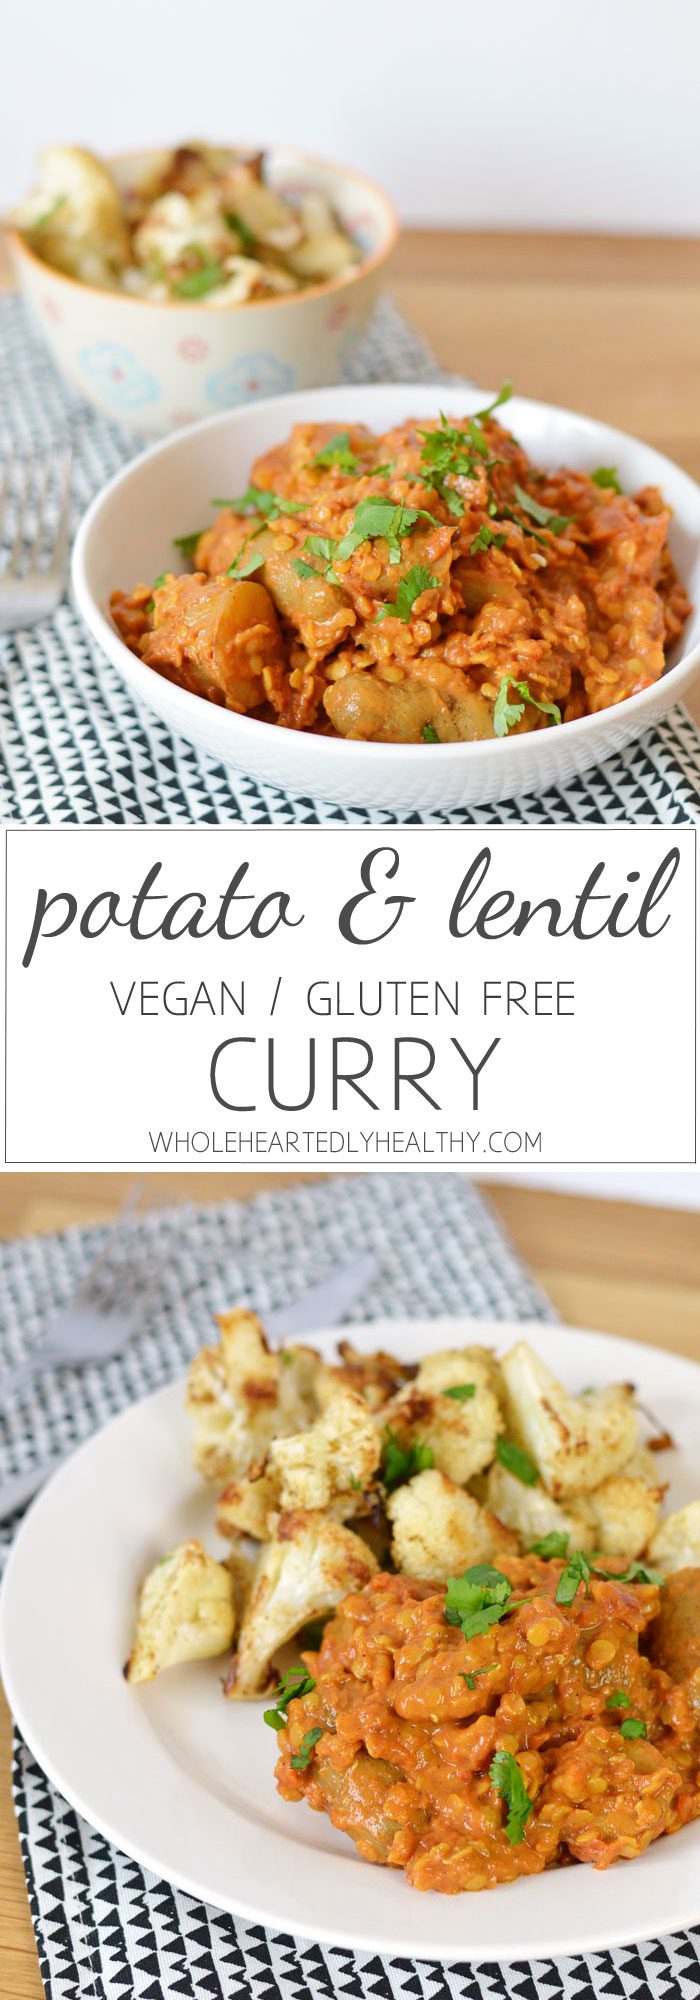 Potato and lentil curry recipe